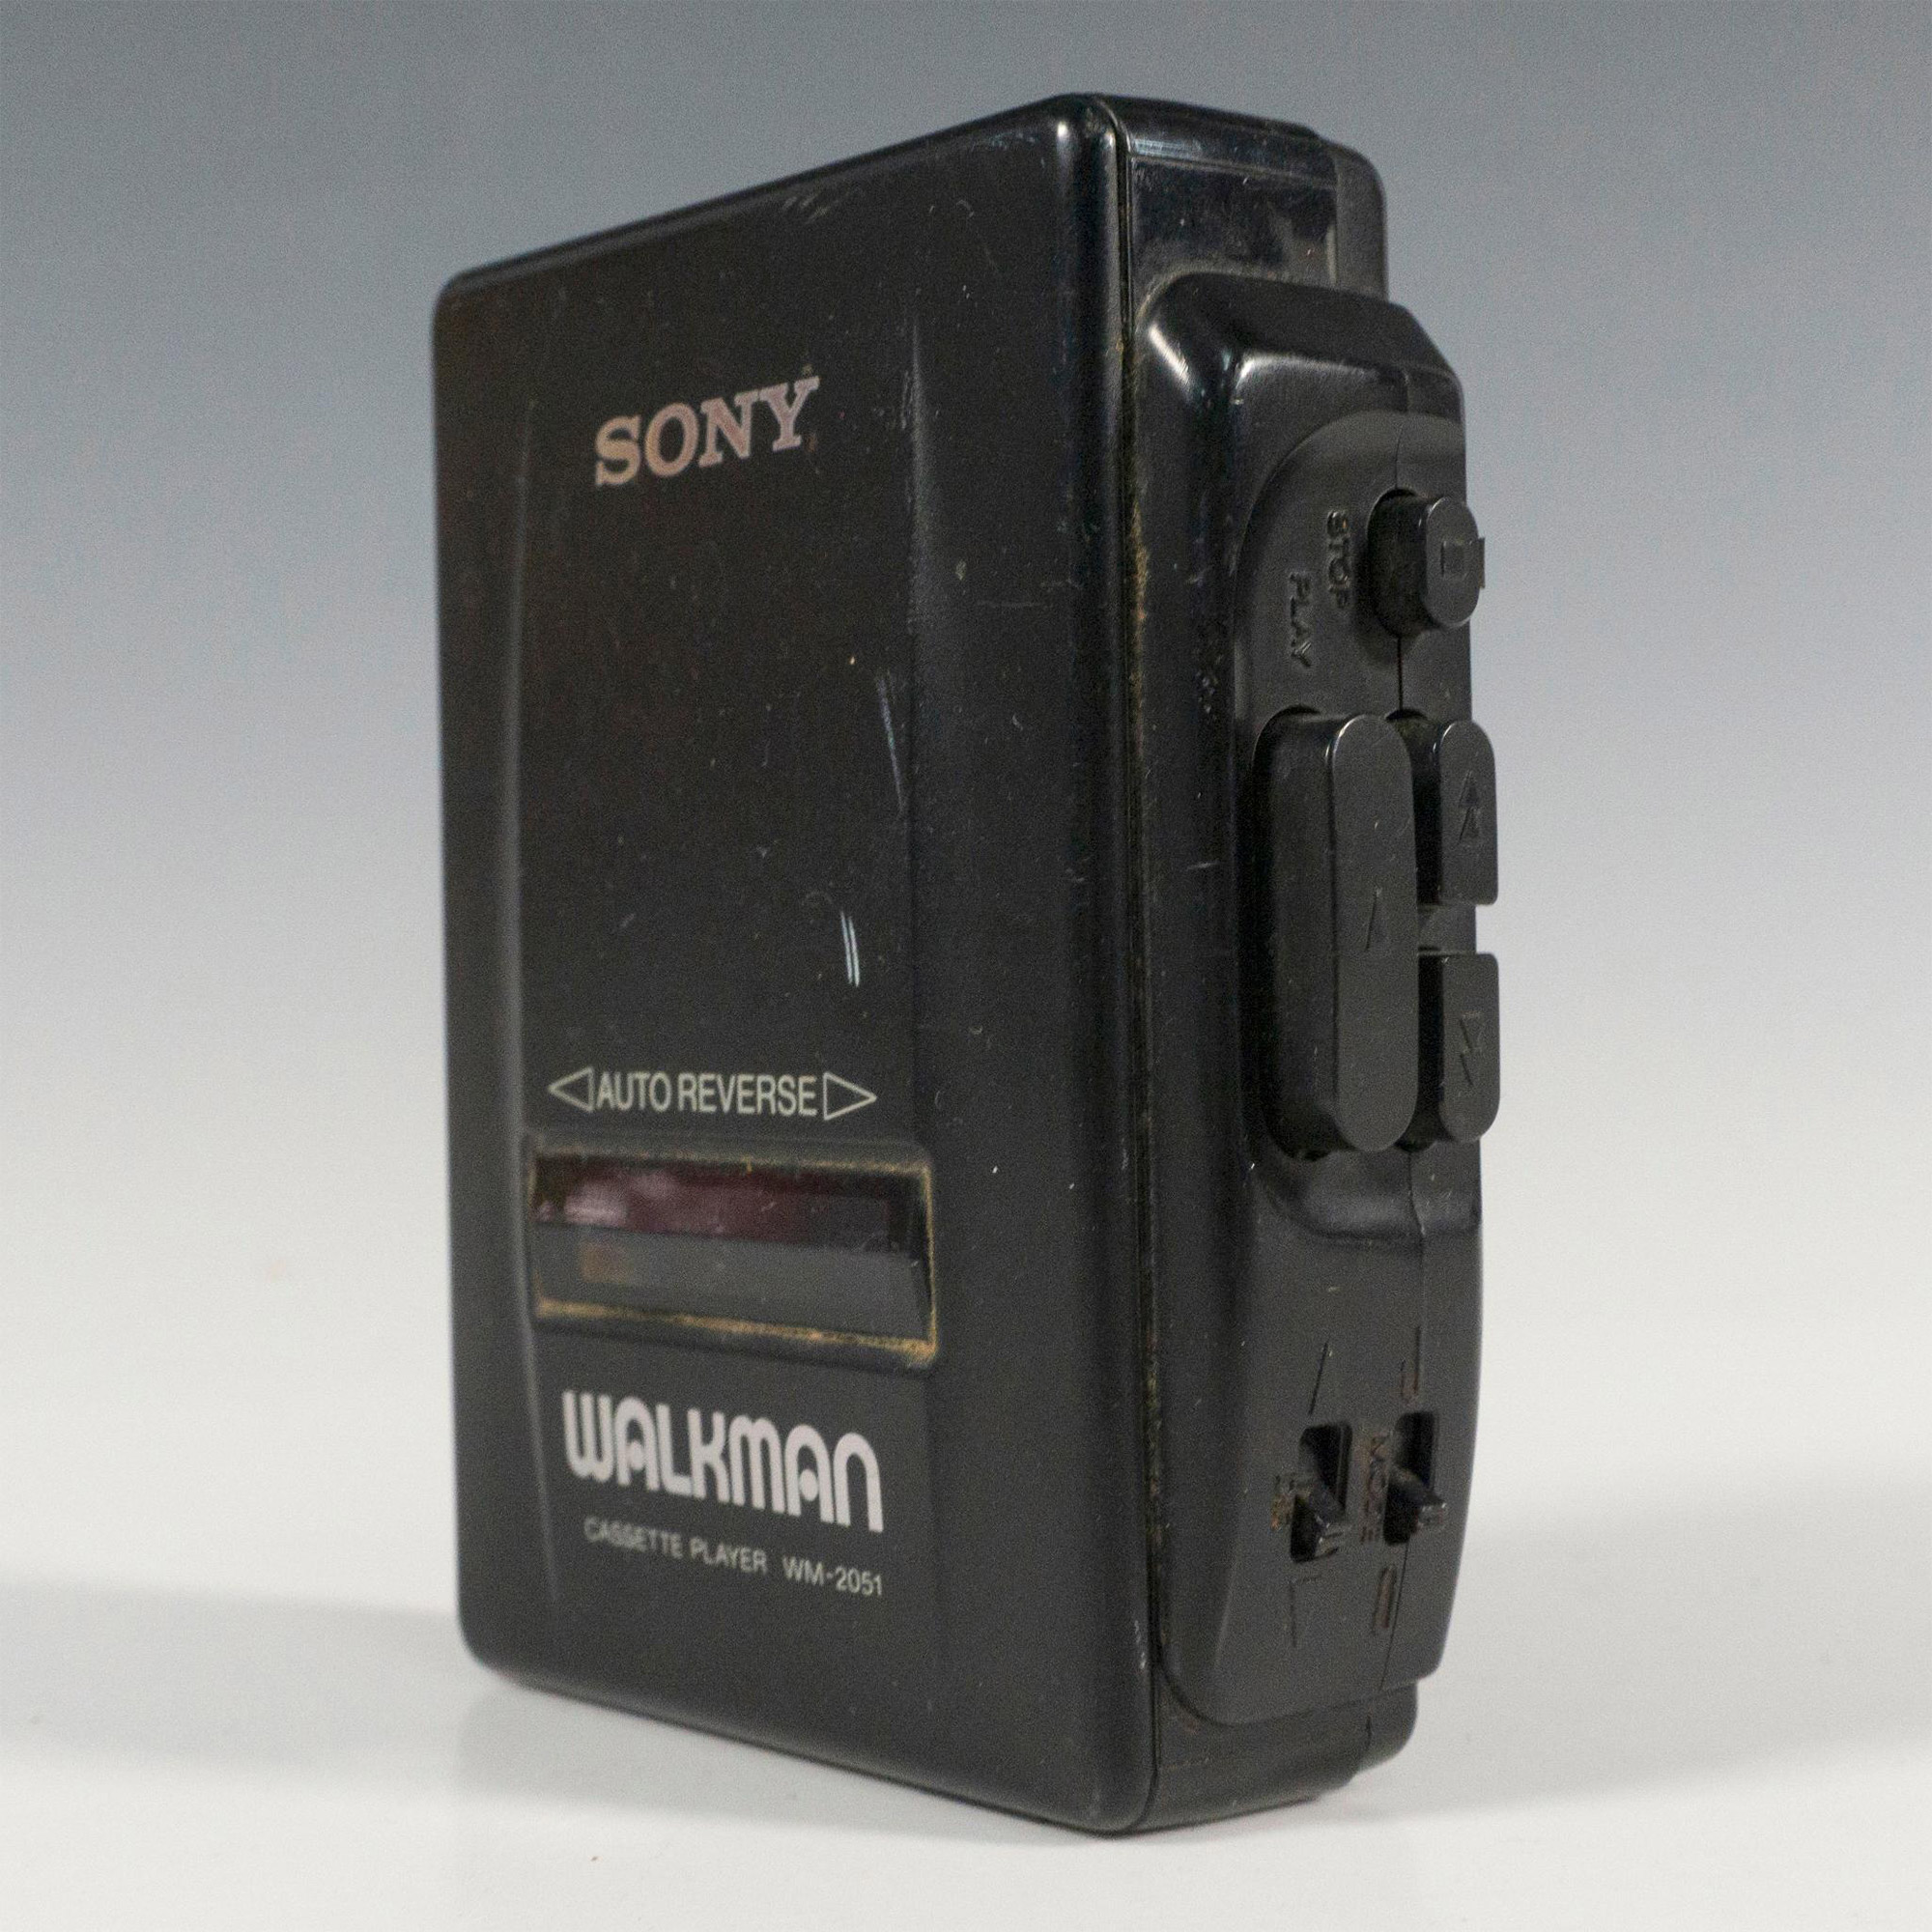 Sony Walkman WM-2051 Portable Cassette Player - Image 2 of 5